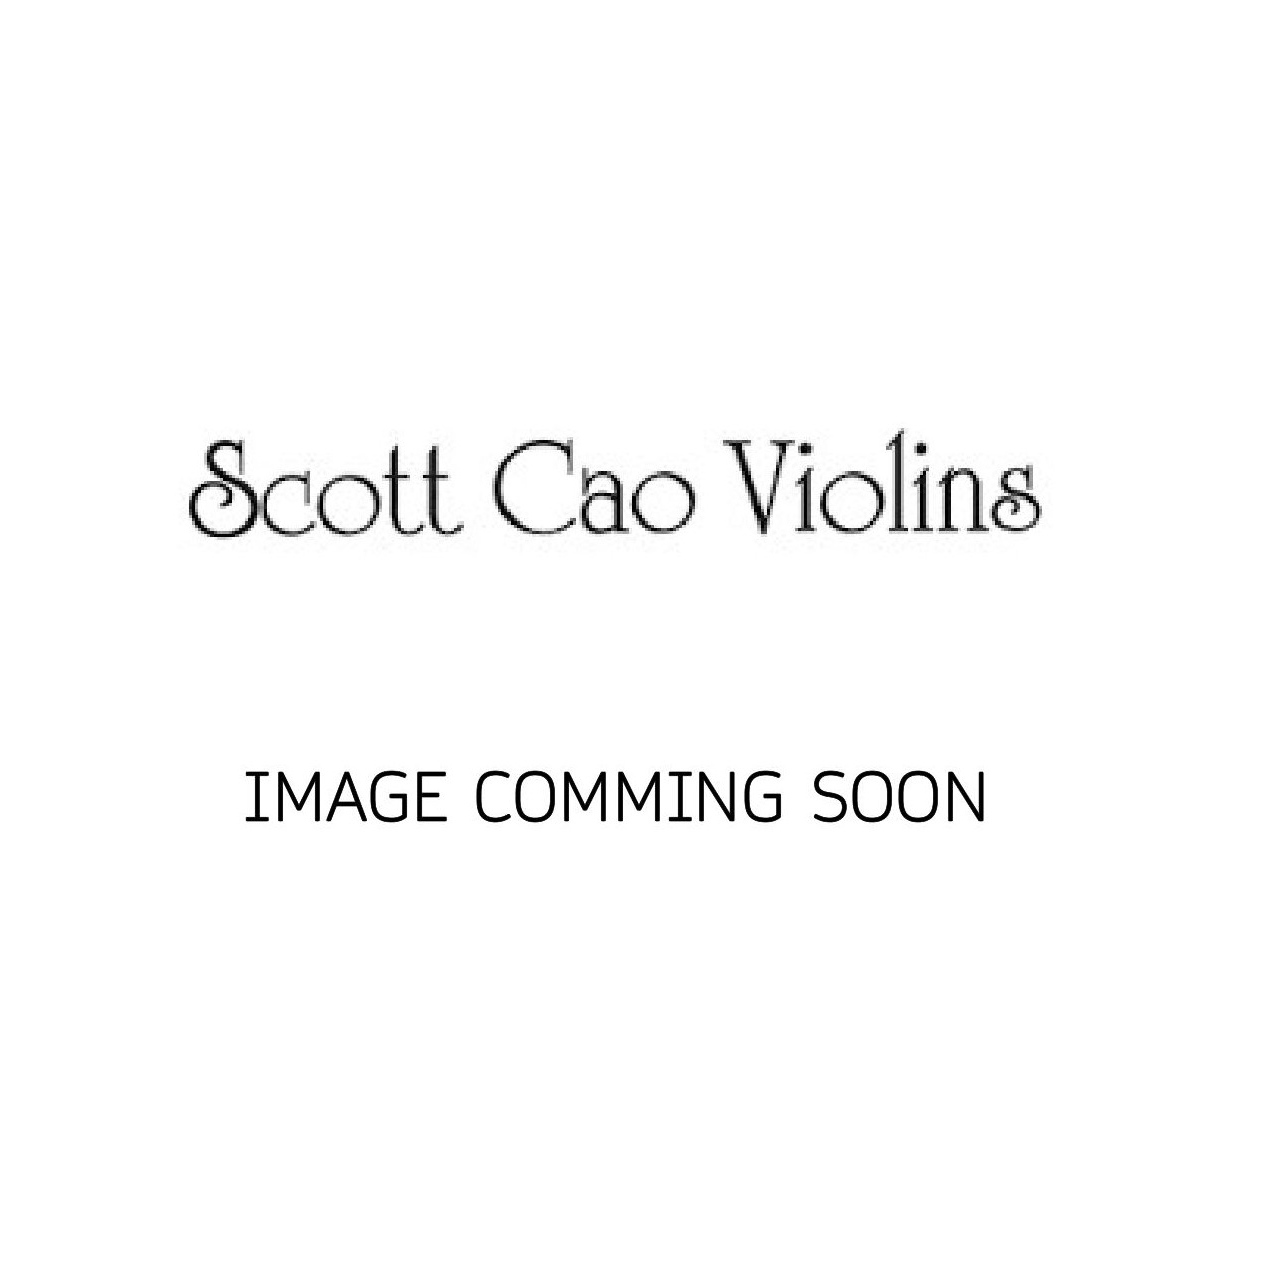 Scott Cao Viola 30,5cm EU-komplett